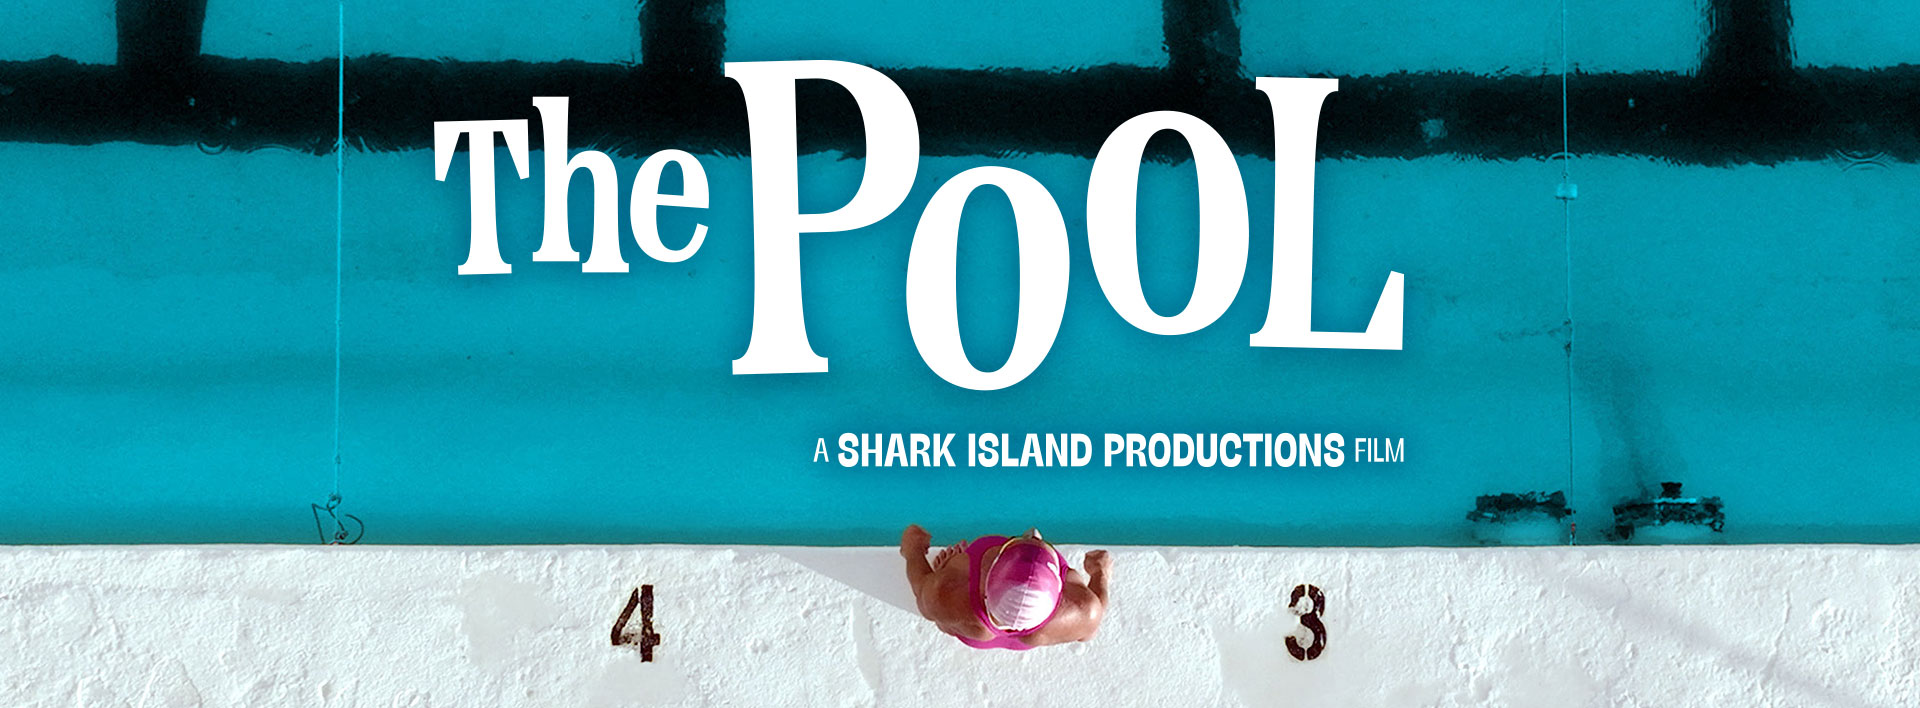 THE POOL | A Shark Island Productions Film